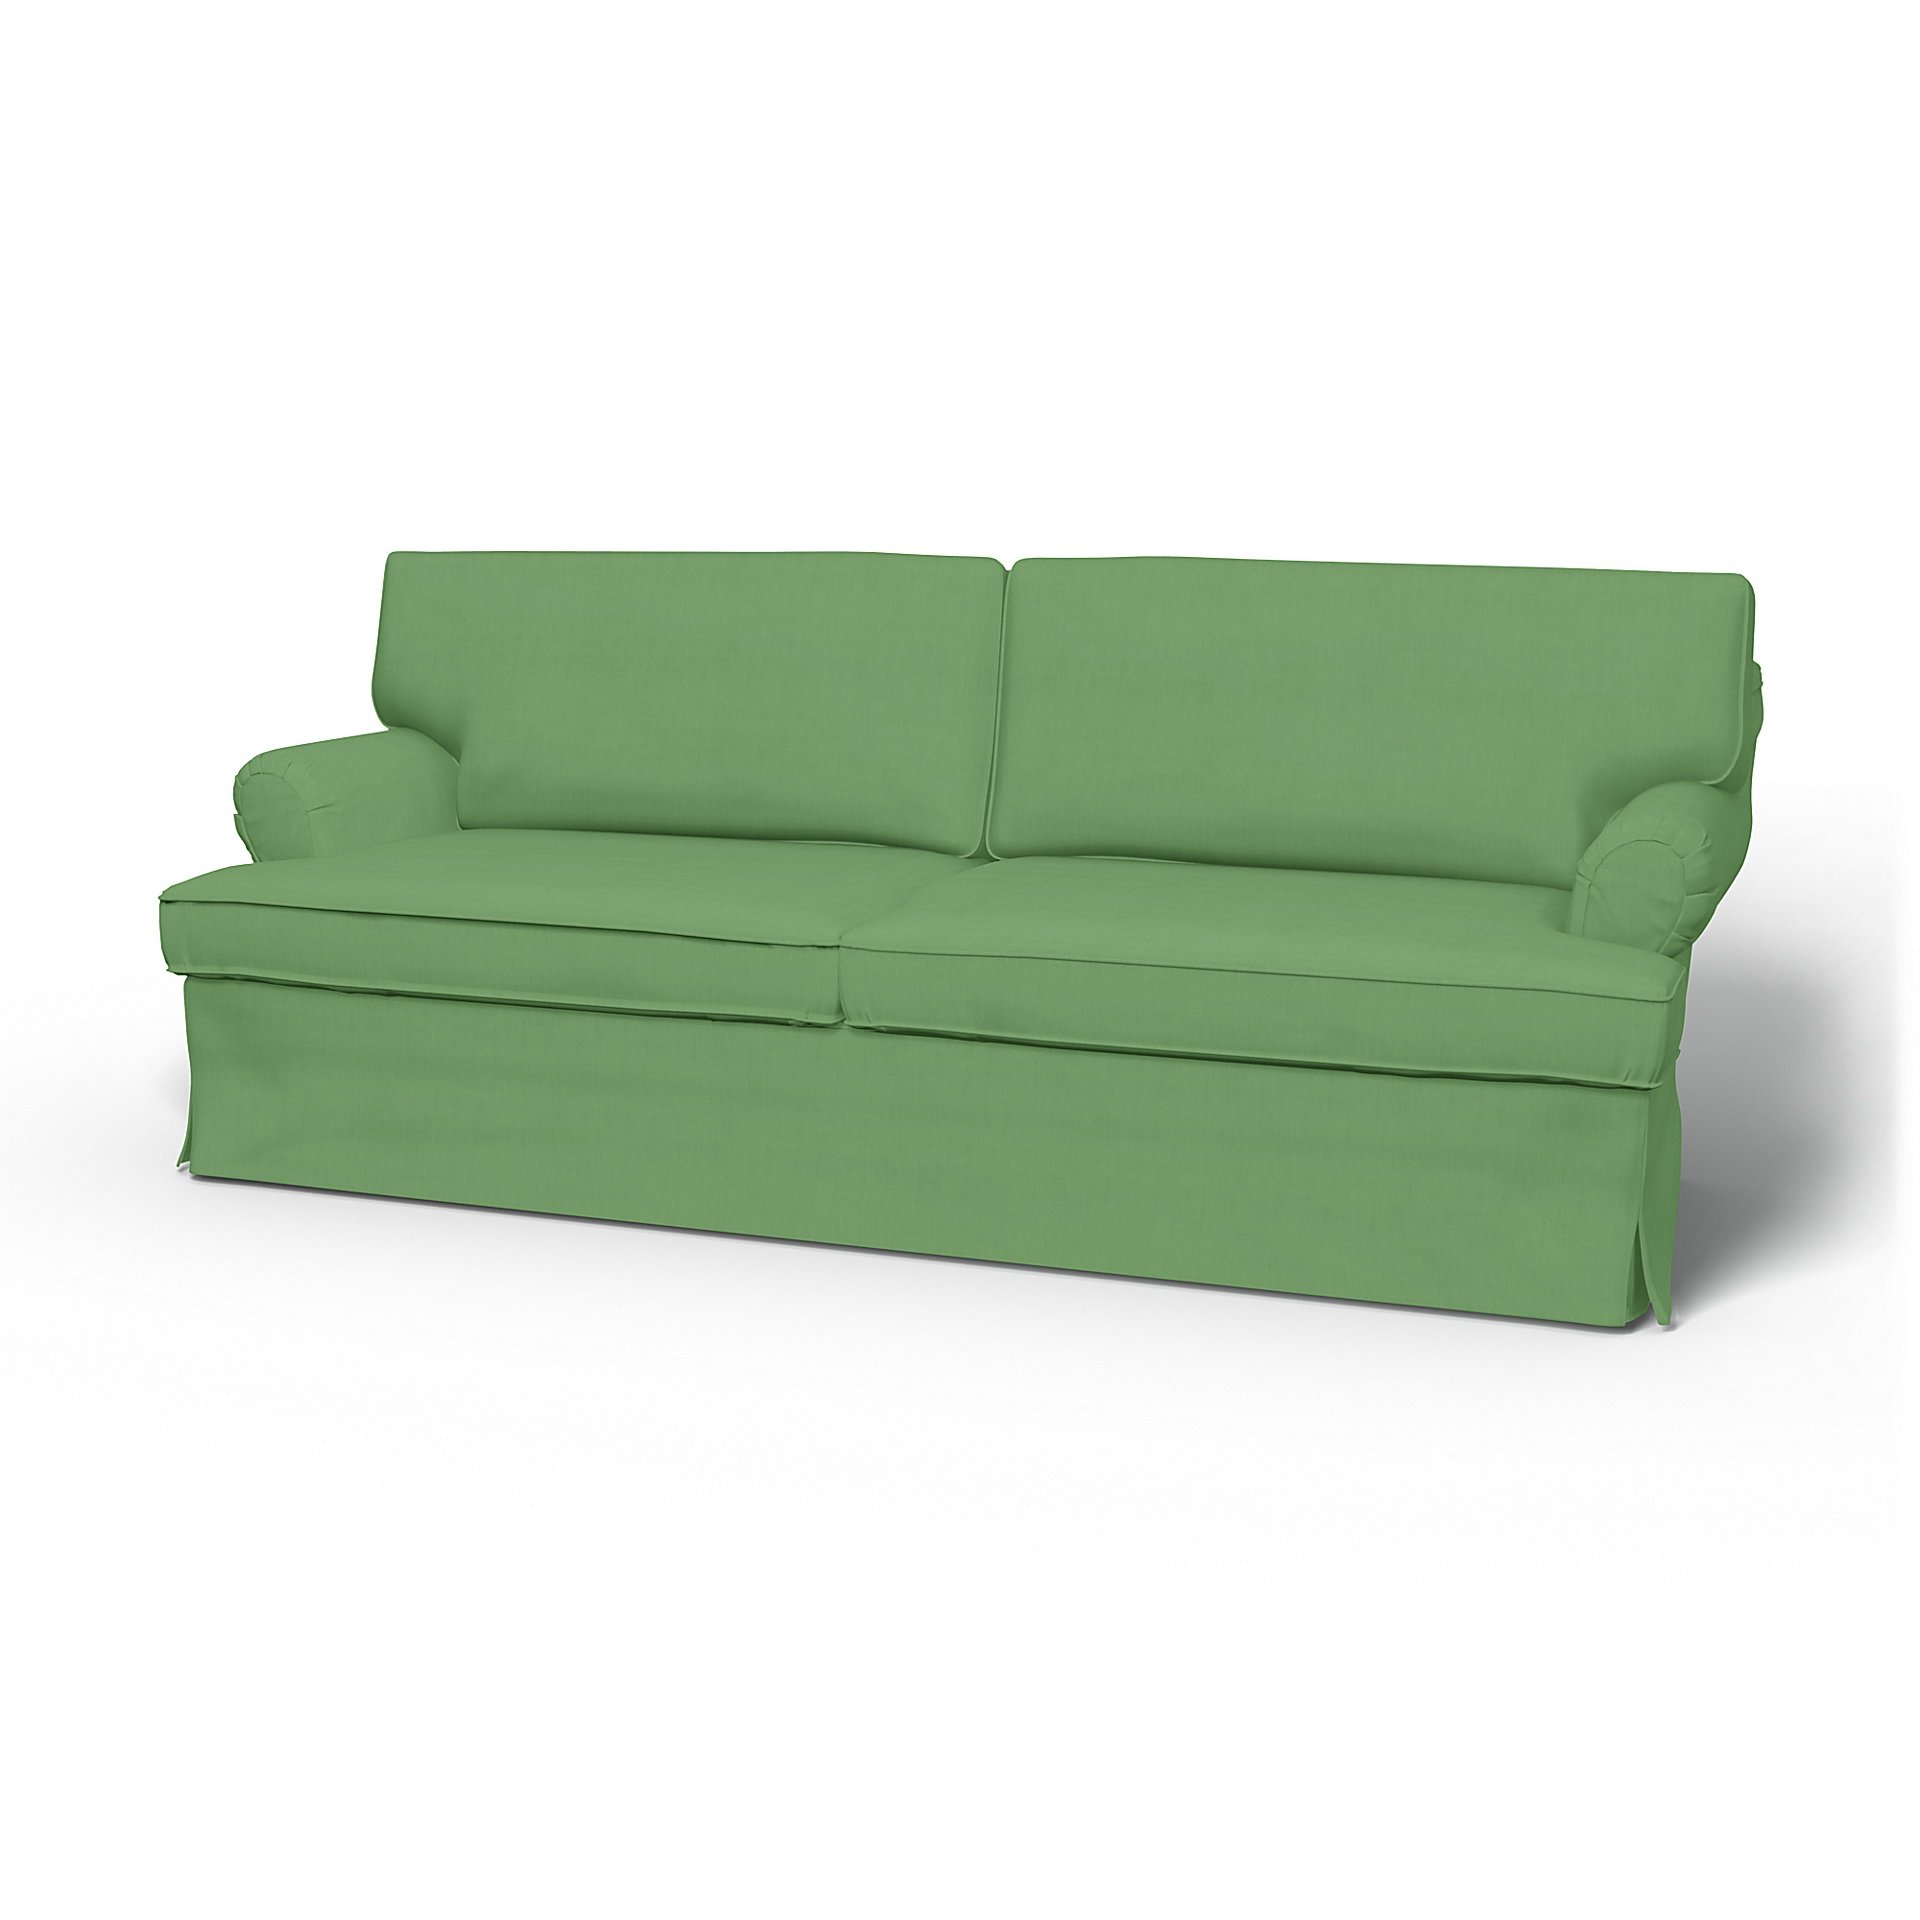 IKEA - Stockholm 3 Seater Sofa Cover (1994-2000), Apple Green, Linen - Bemz